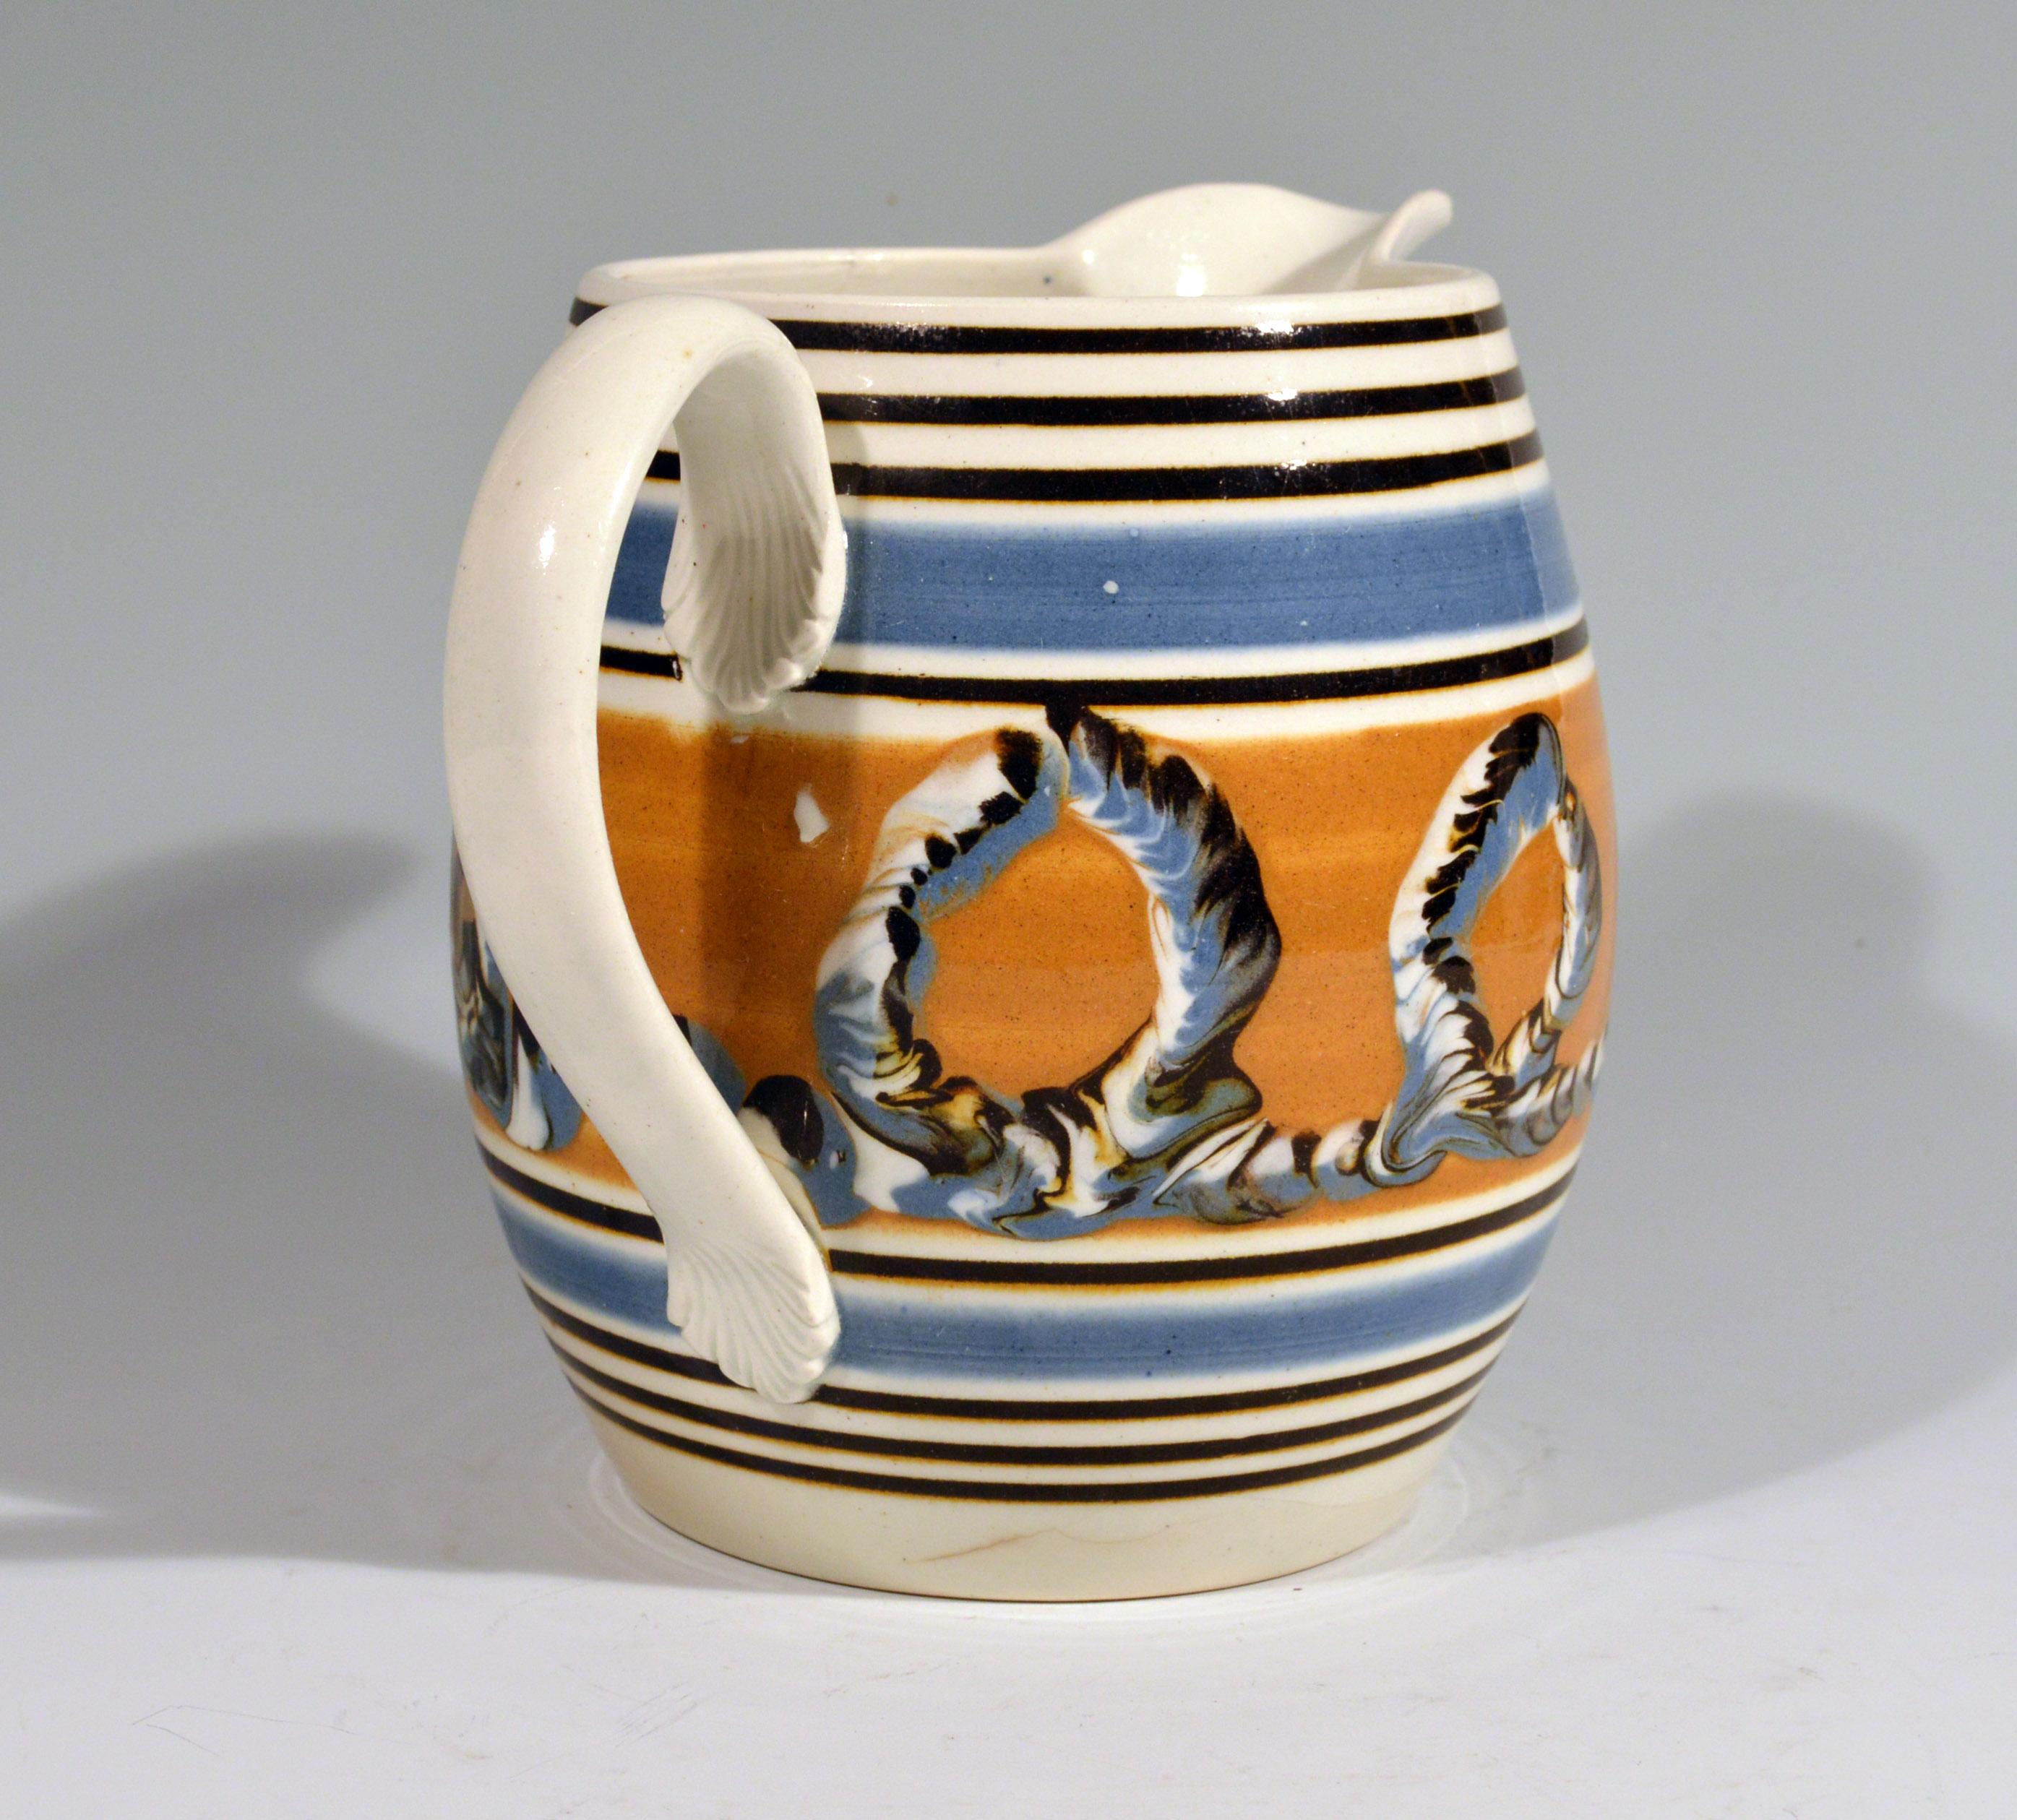 Folk Art Banded Pearlware Mocha Jug with Earthworm Design, 1790-1810